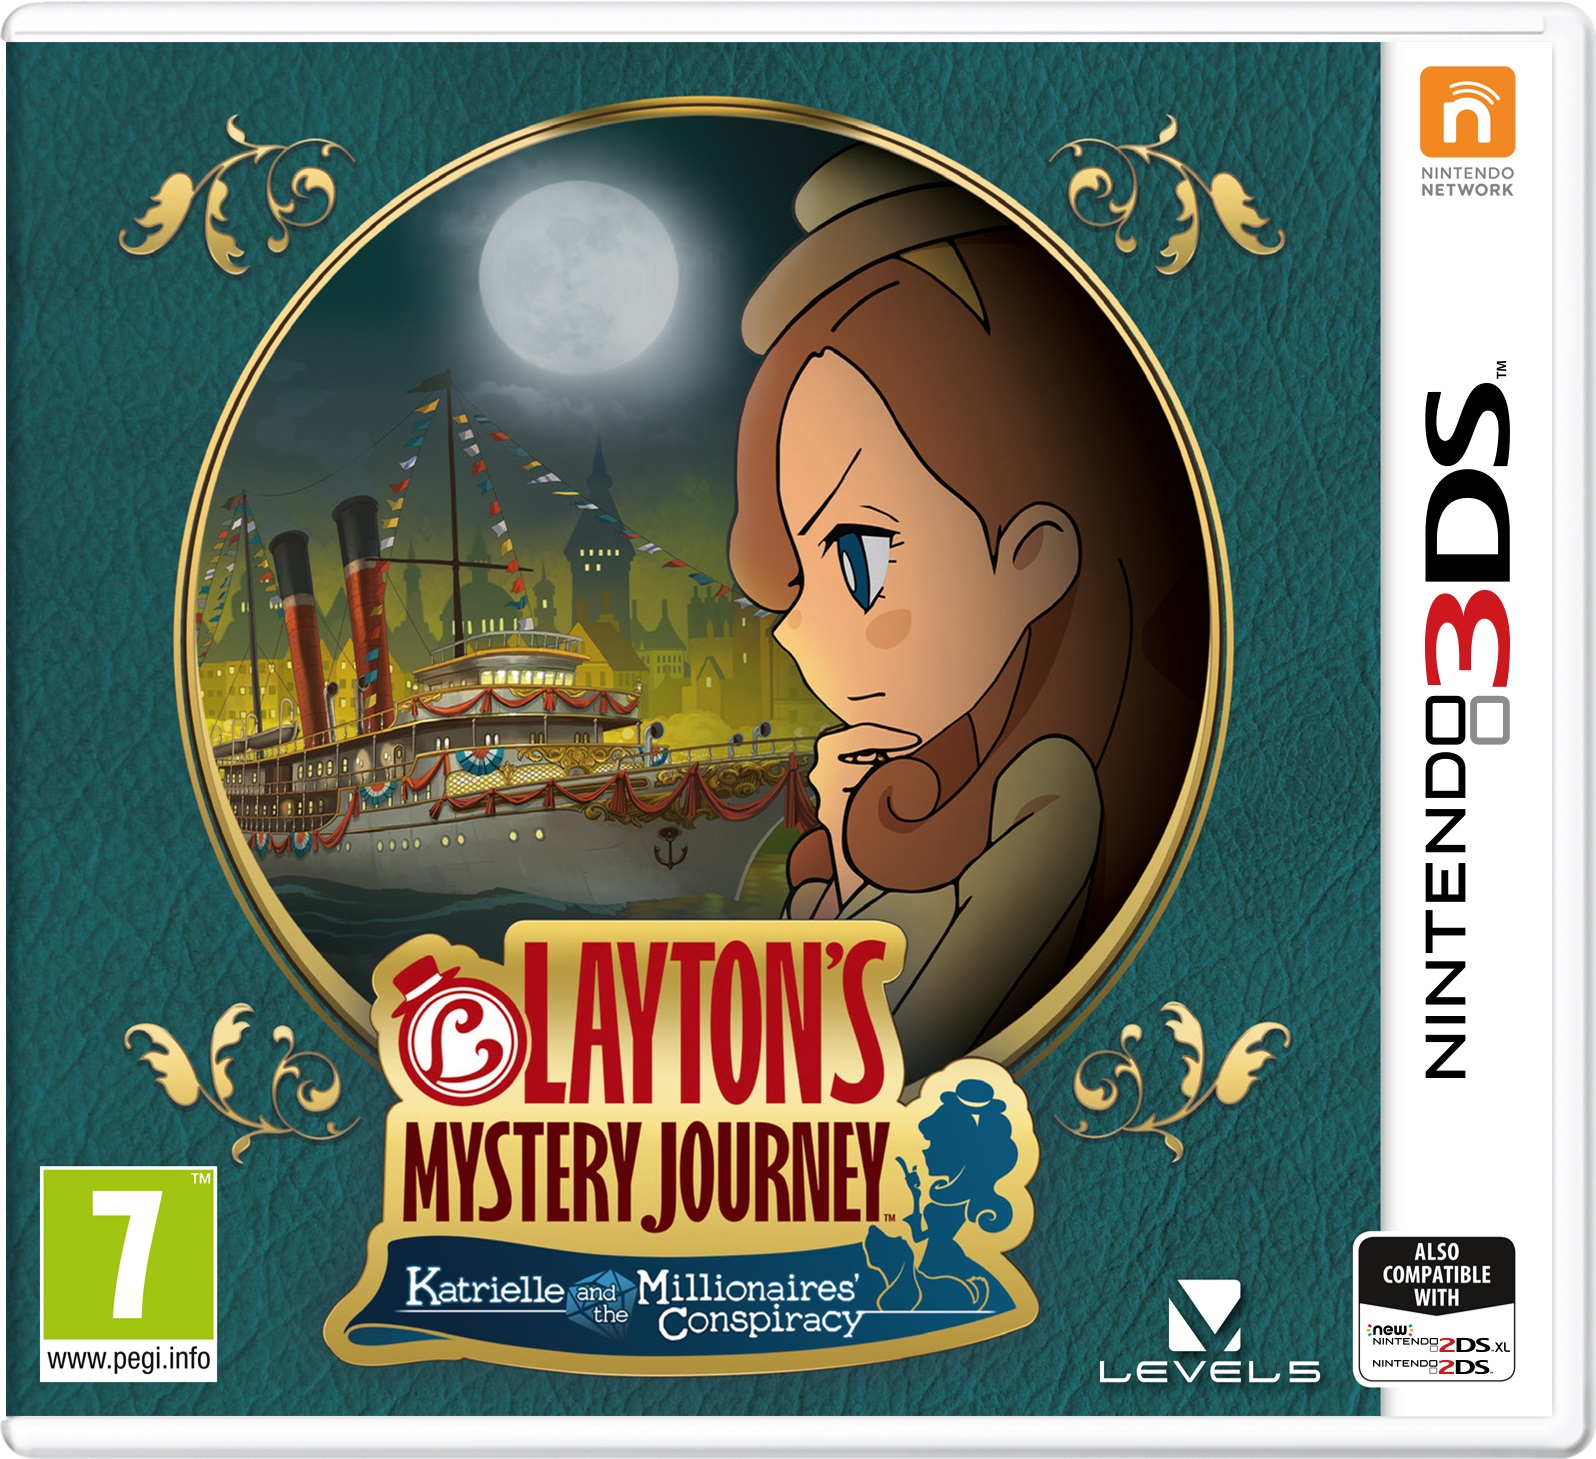 Layton's Mystery Journey: EU boxart - Nintendo Everything1596 x 1459